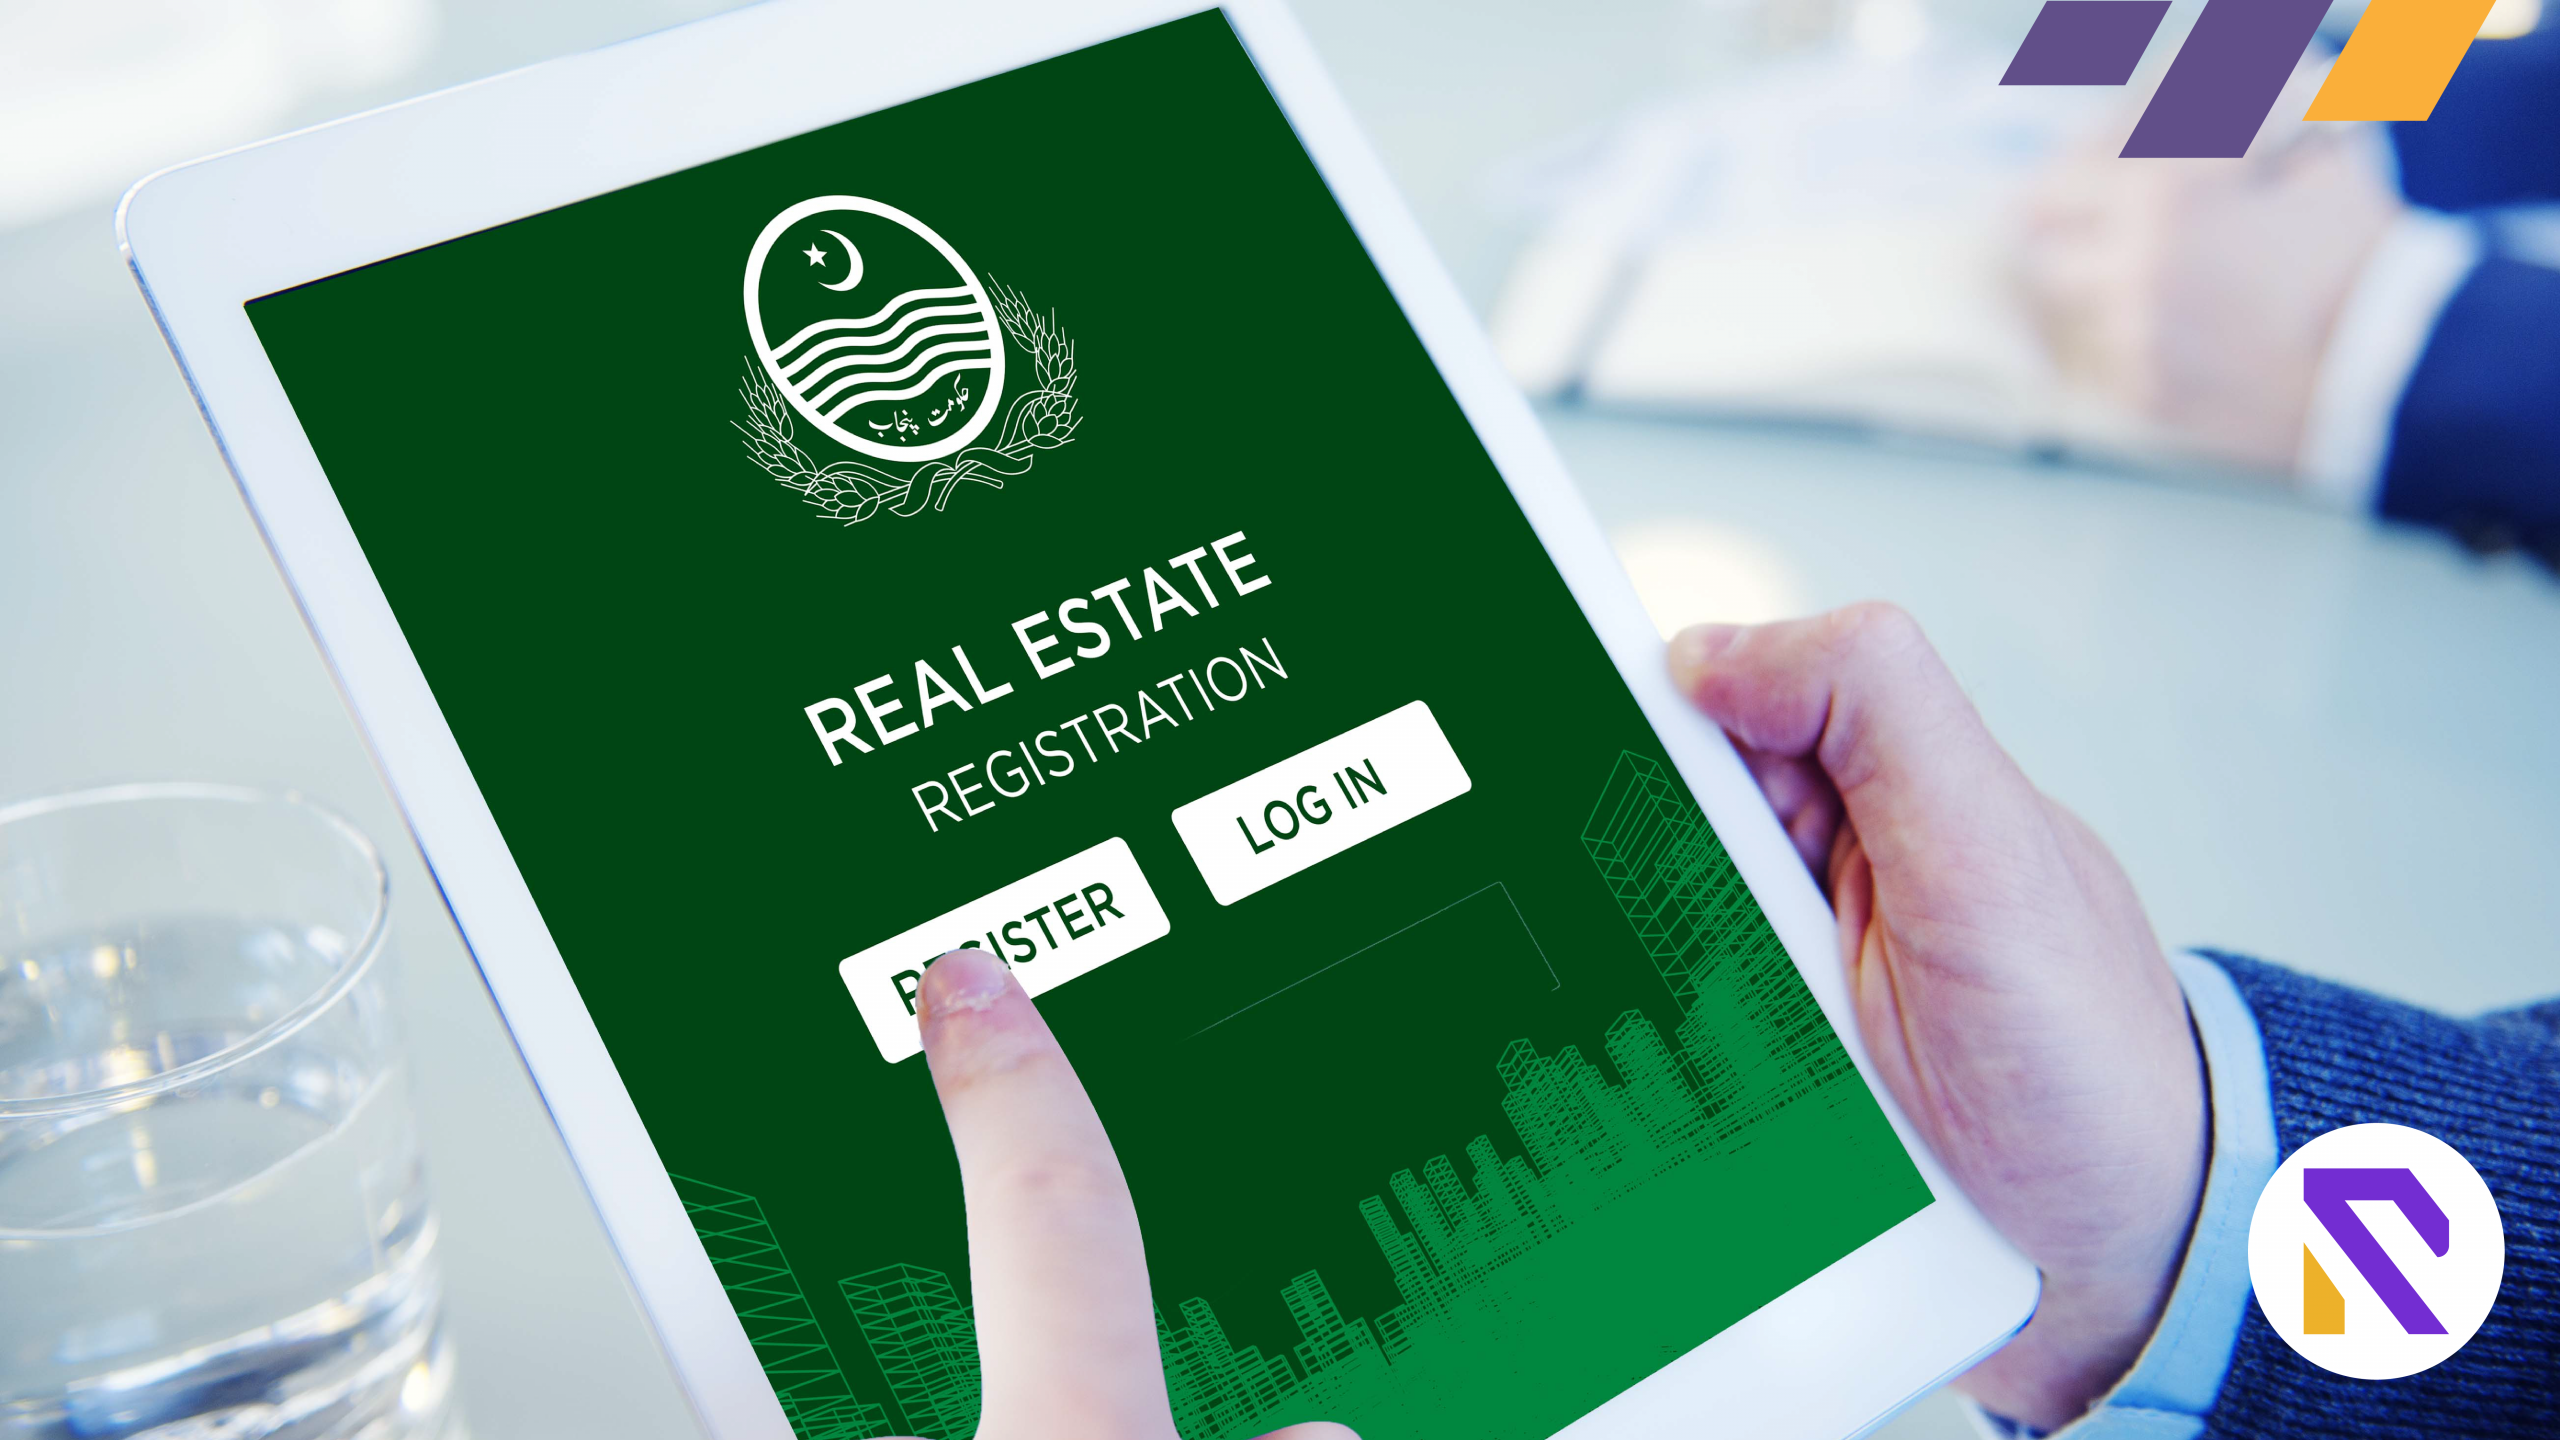 Punjab Government has initiated the e-registration system for real estate registration-realtorspk